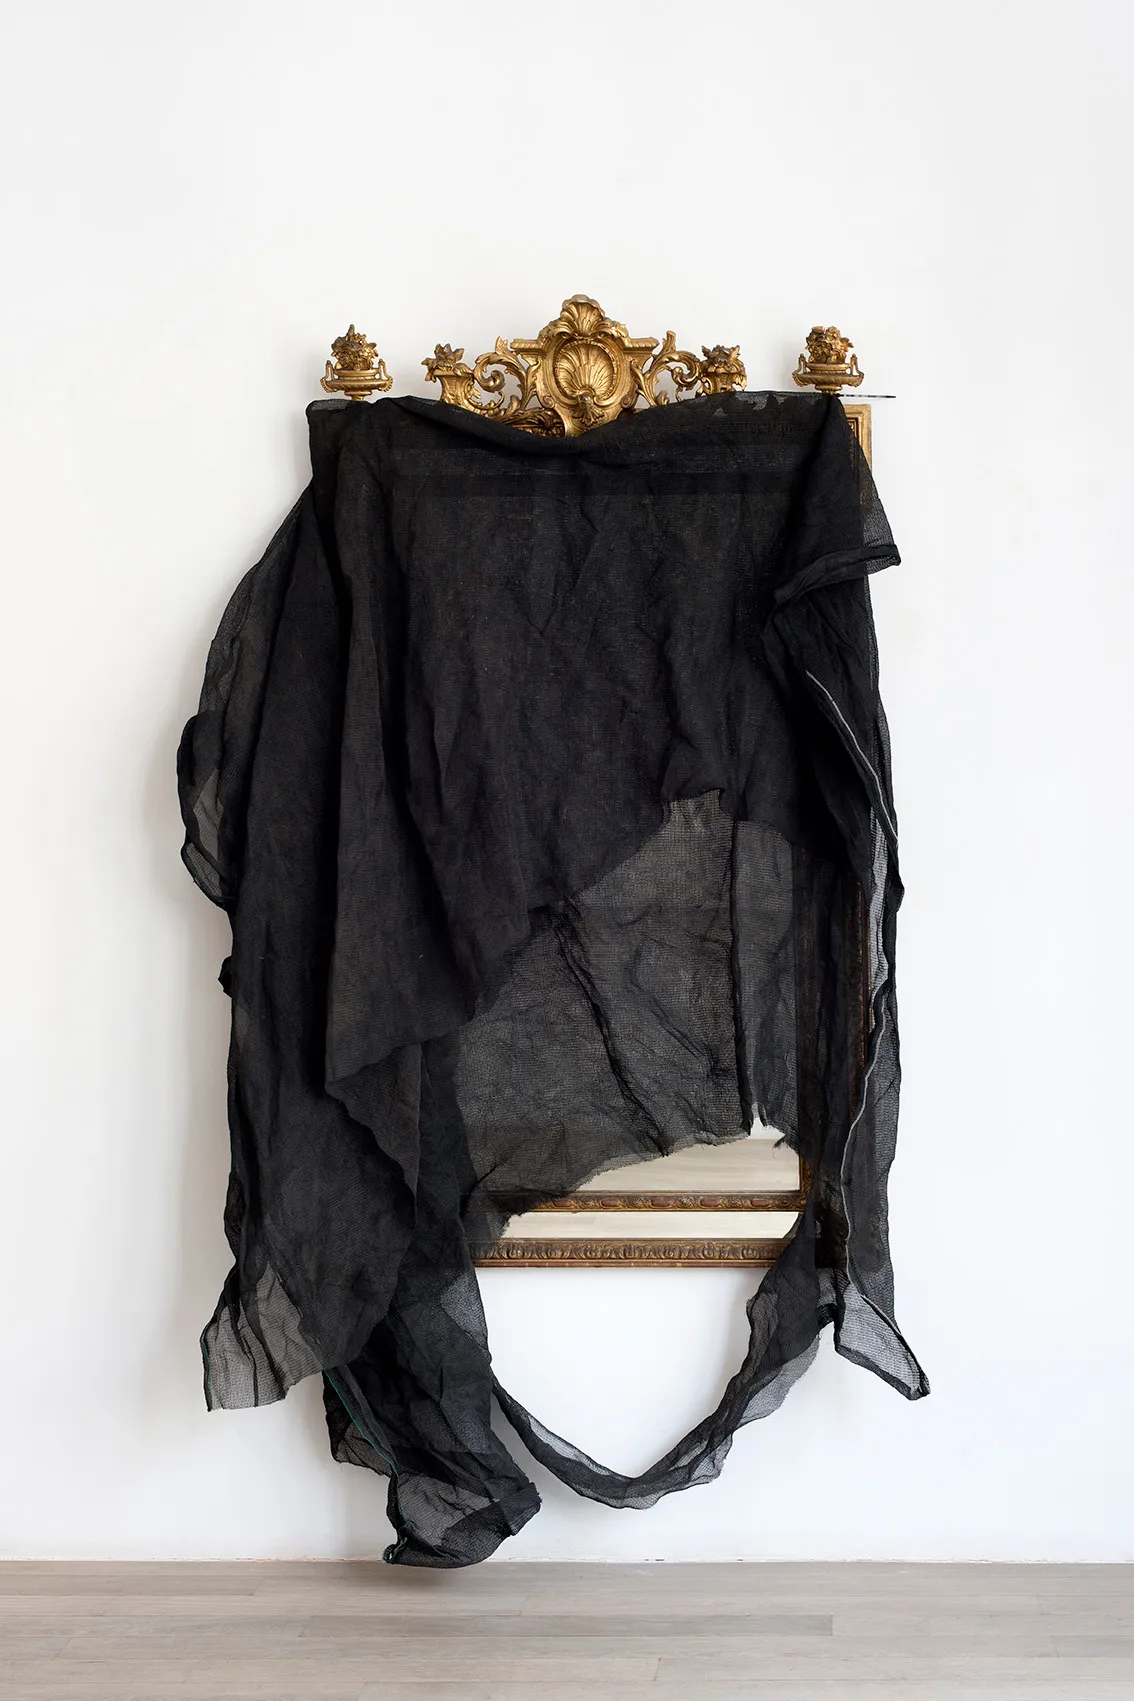 David Hammons - Untitled, 2014, fabric, mirror, nylon strap and wood